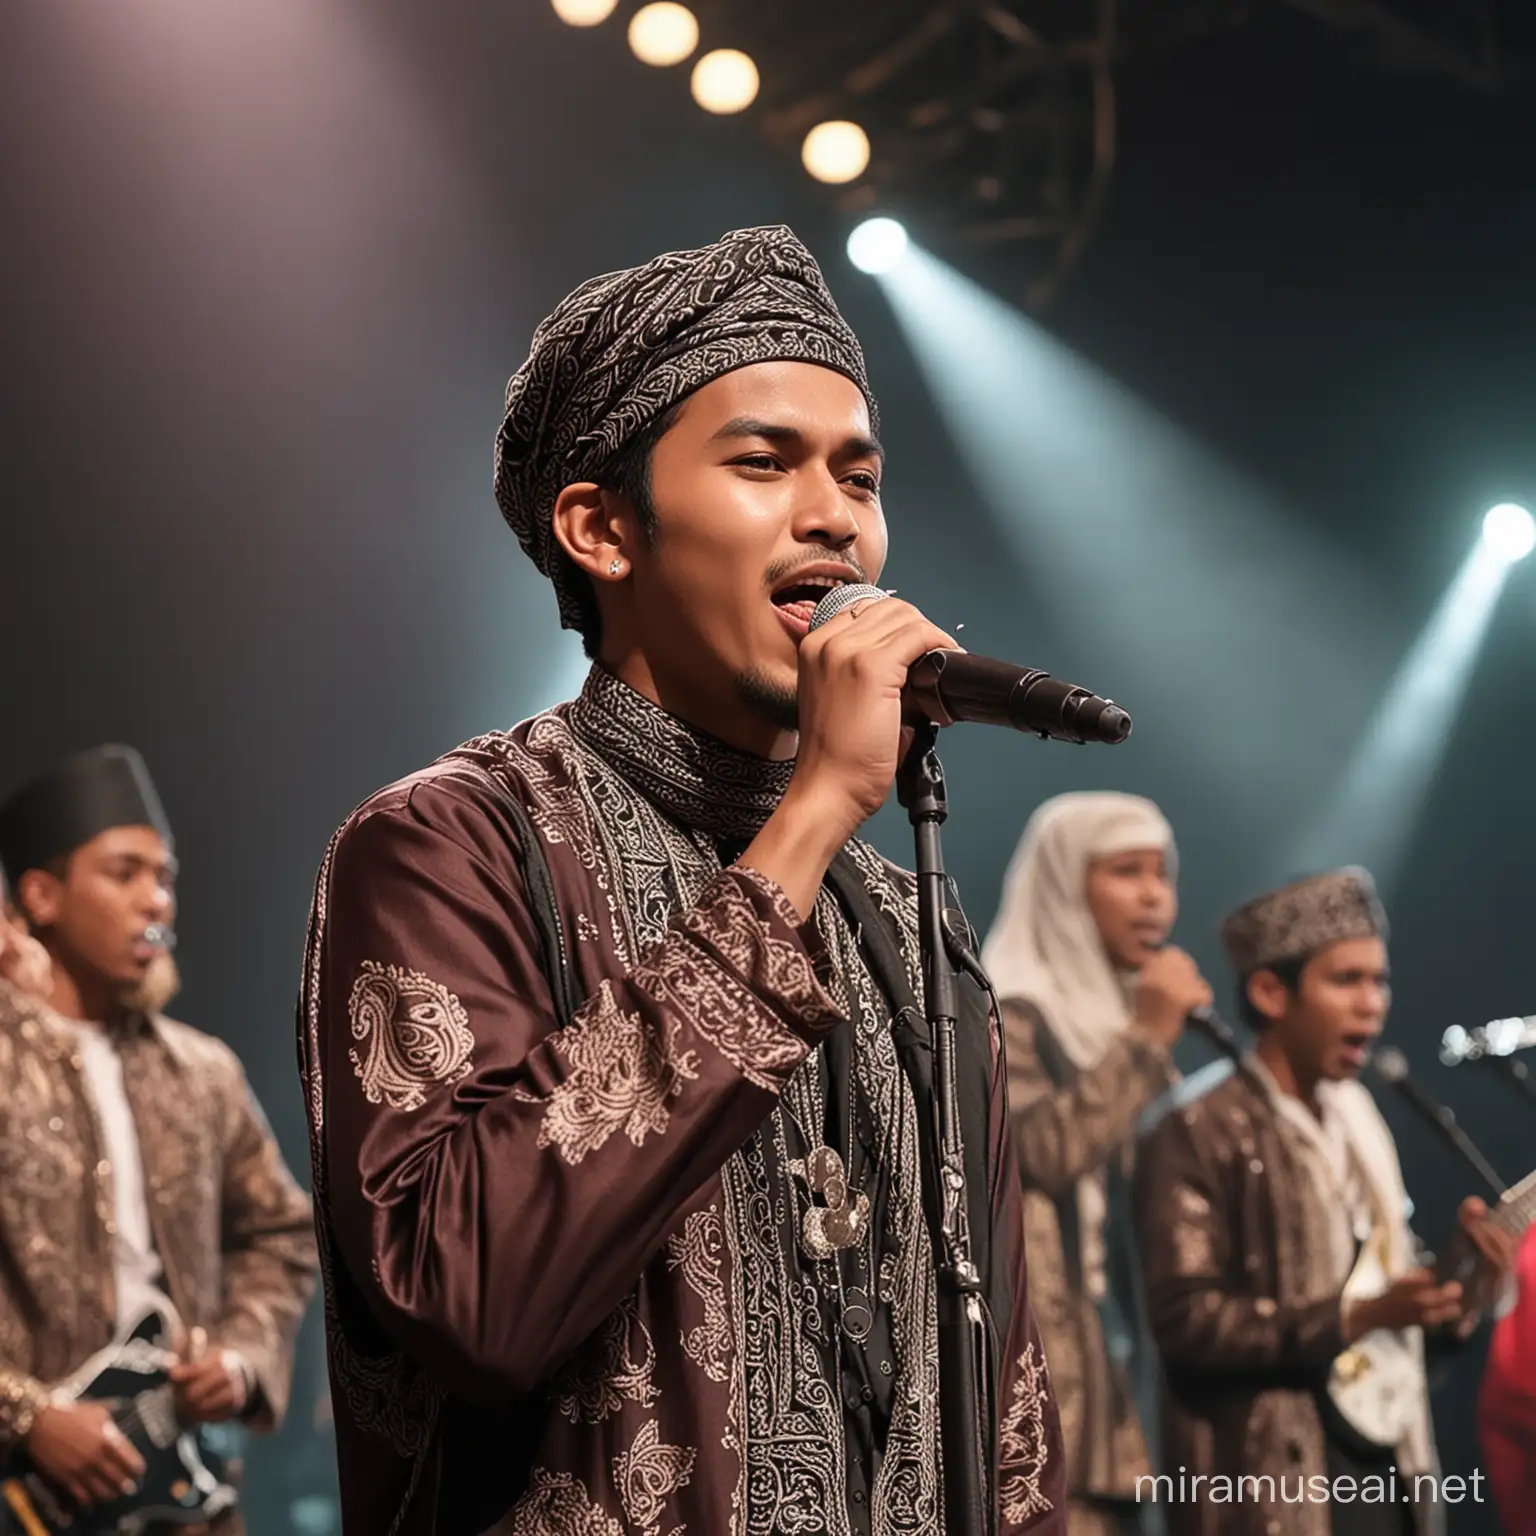 Luxurious Muslim Singer Performing on Lavish Stage